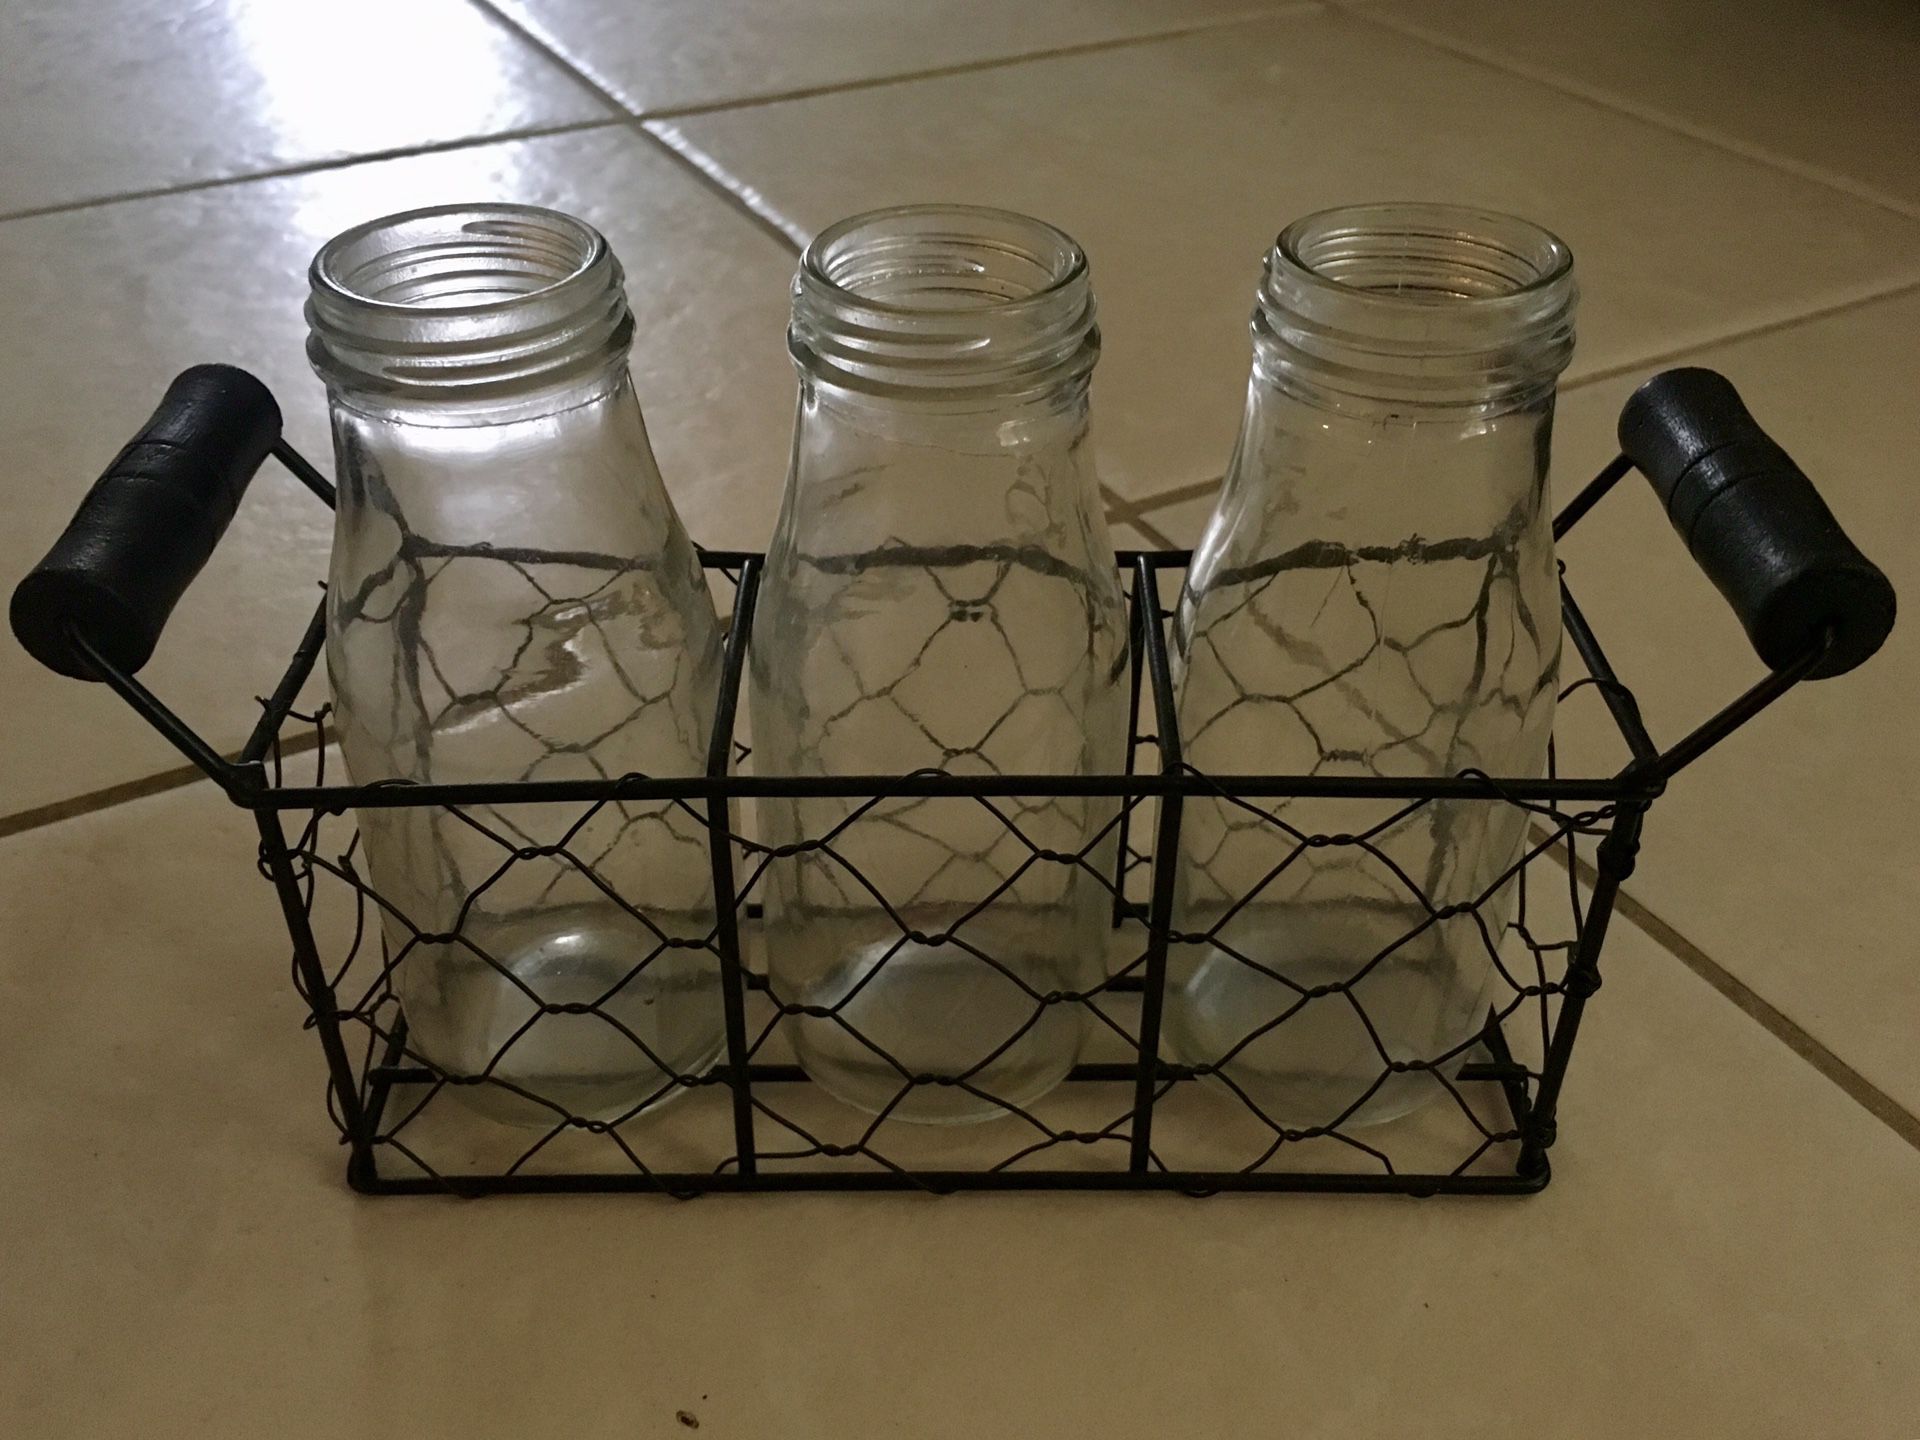 3 Milk Jar Flower Vase w/Wire Caddy- Farmhouse Decor Or Kitchen Caddy